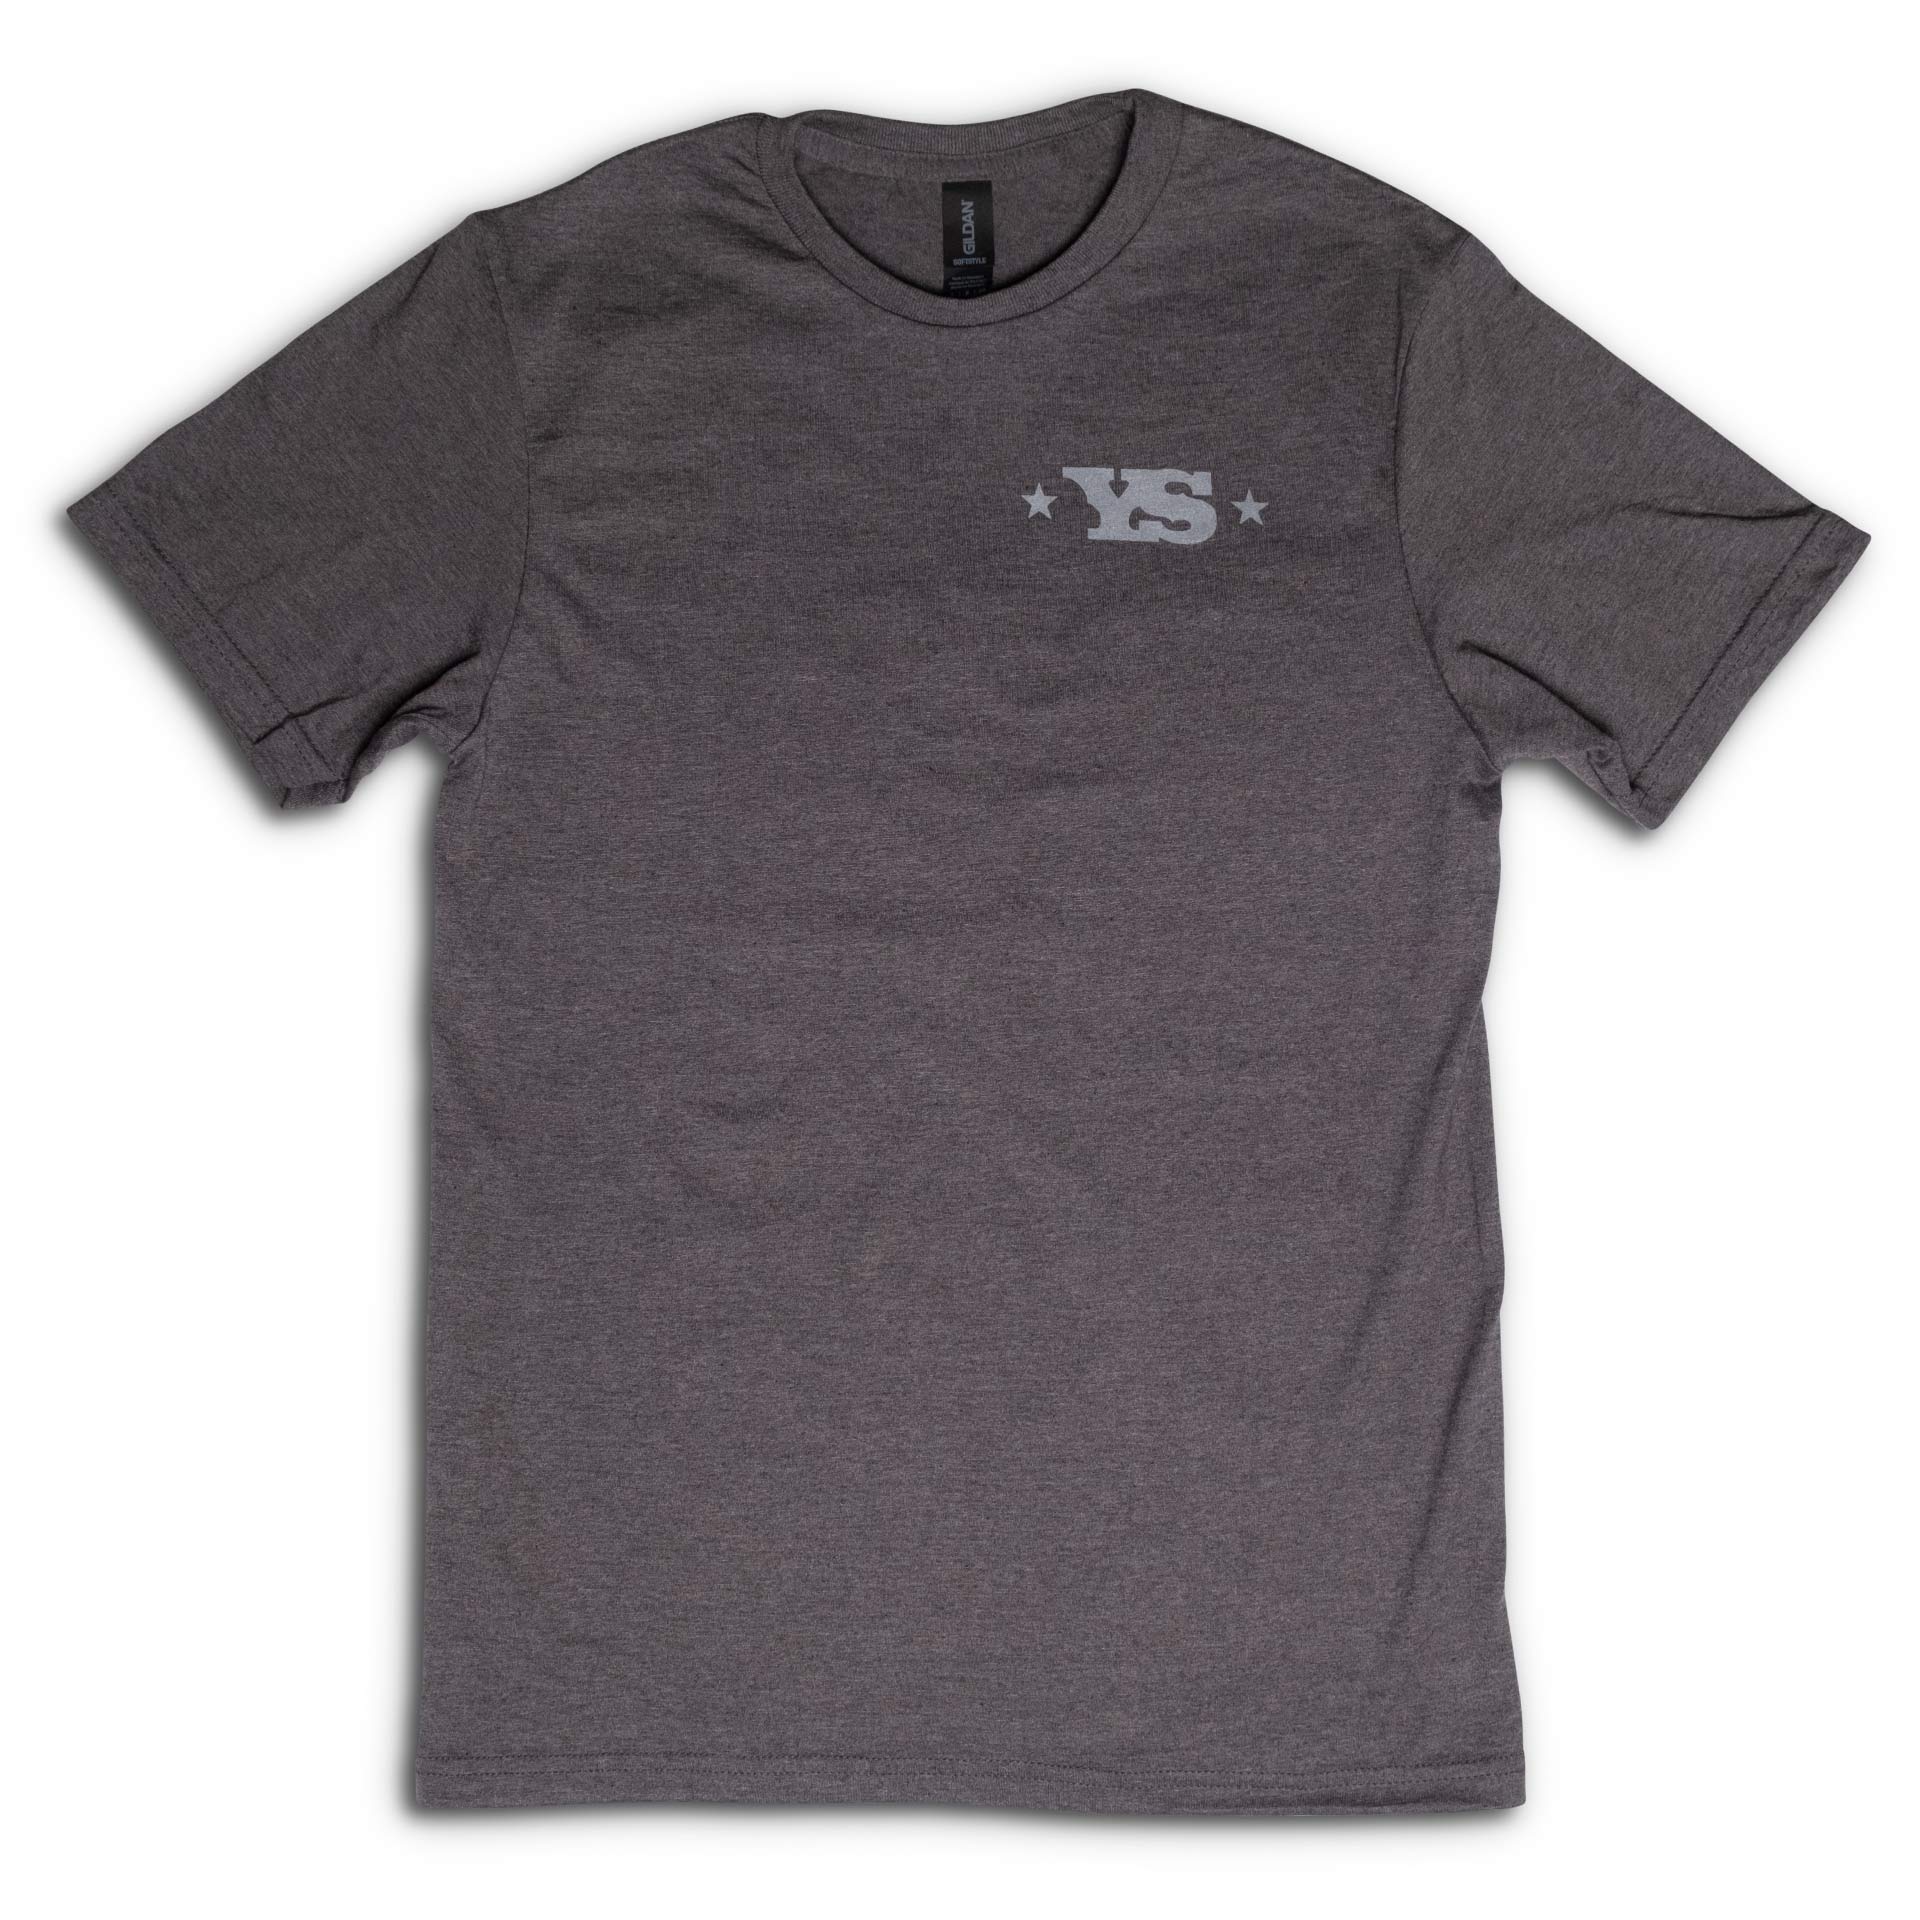 Yoder Smokers Black Logo Gray Tee Shirt Shirts & Tops S 12040801